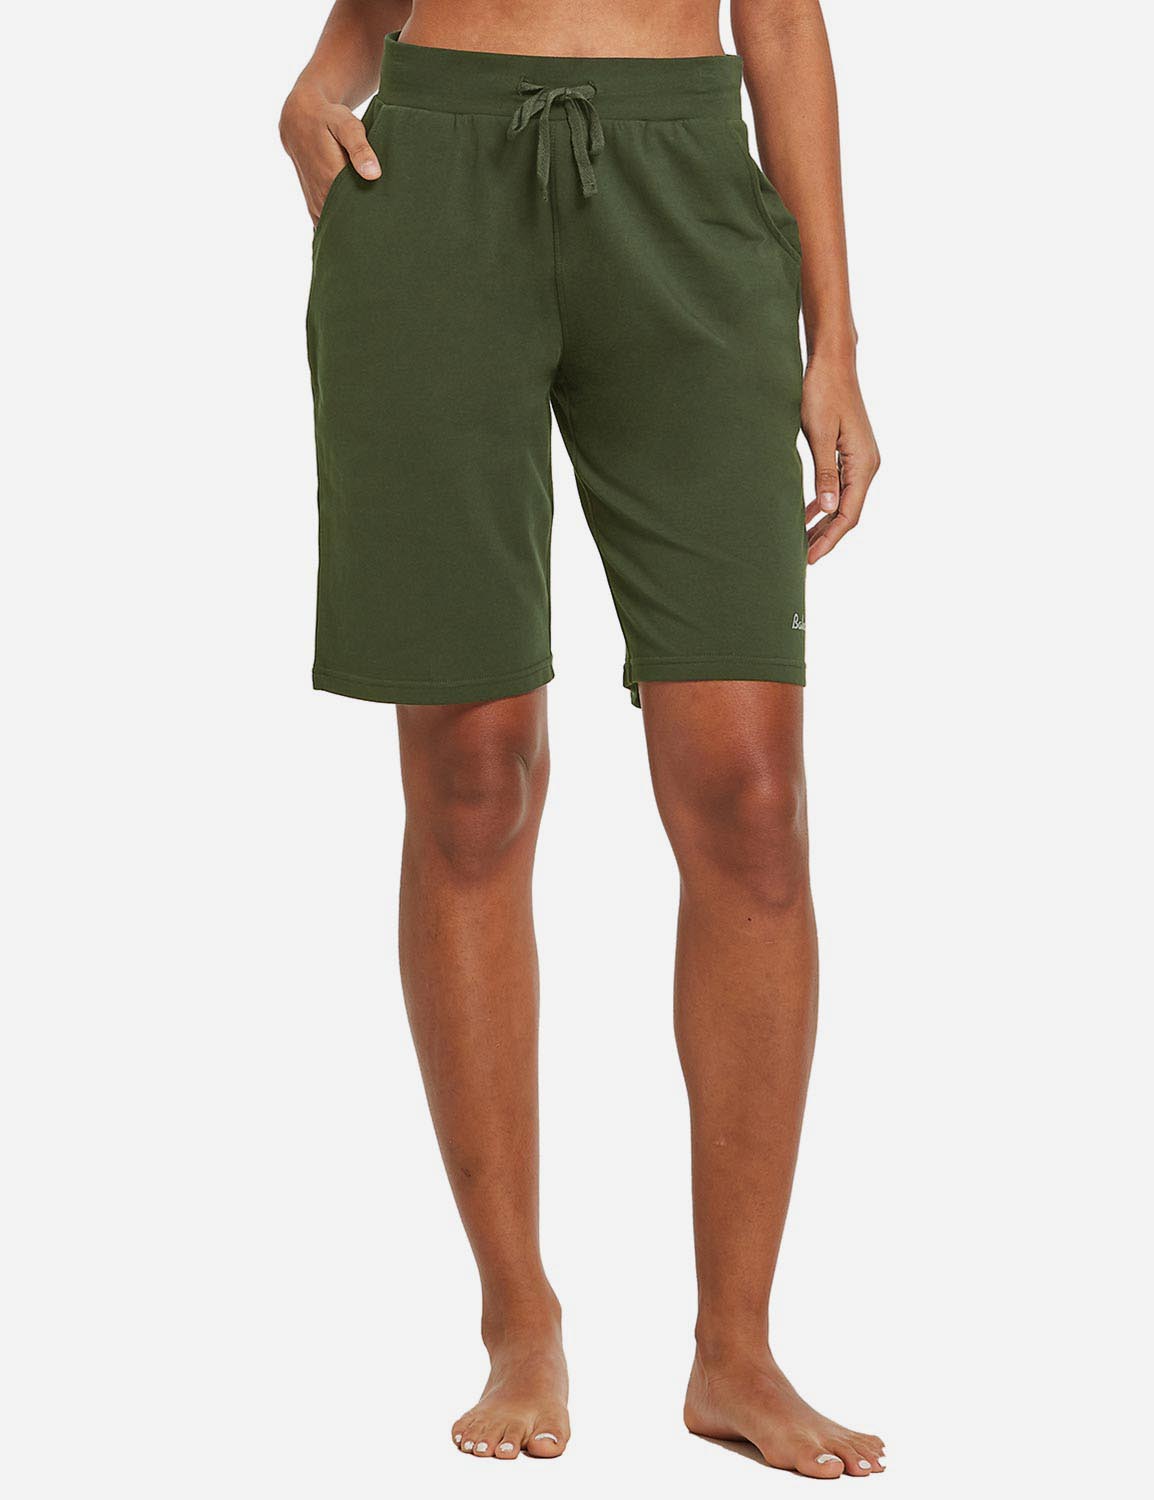 Baleaf Women's Cotton Straight Leg Pocketed Weekend Bermuda Shorts abh179 Olive Front